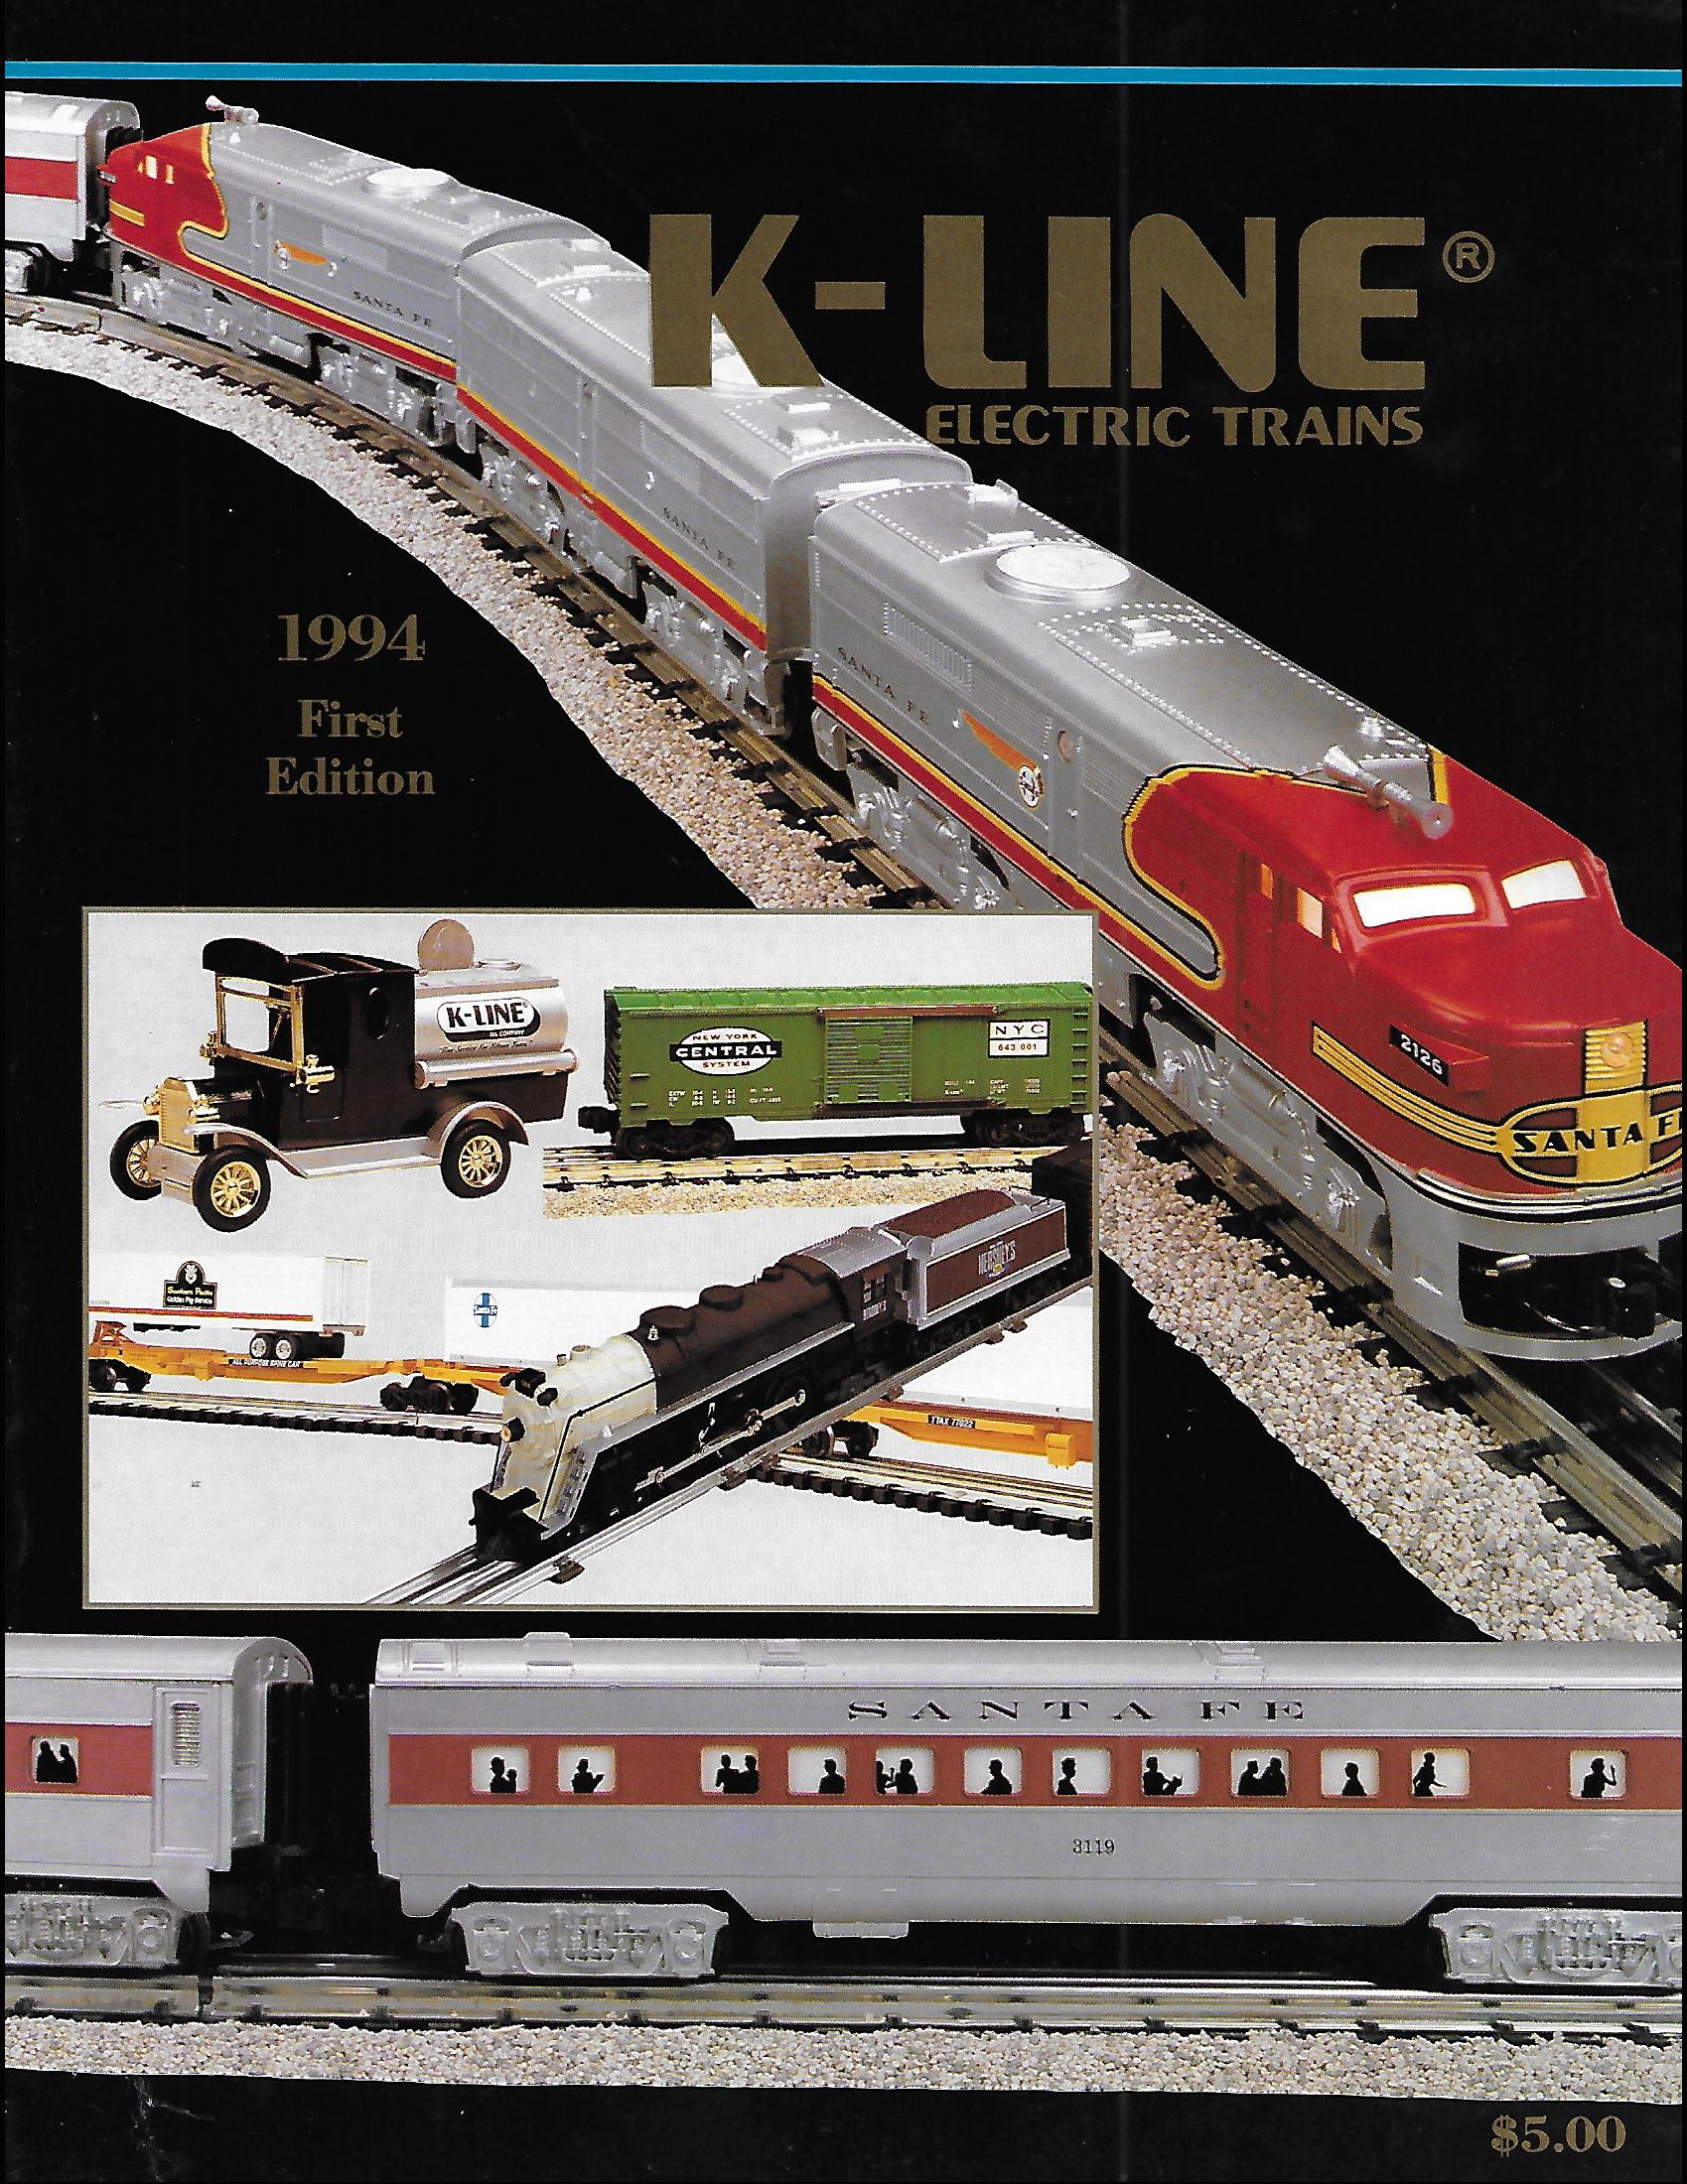 K-Line 1994 Second Edition Catalog image